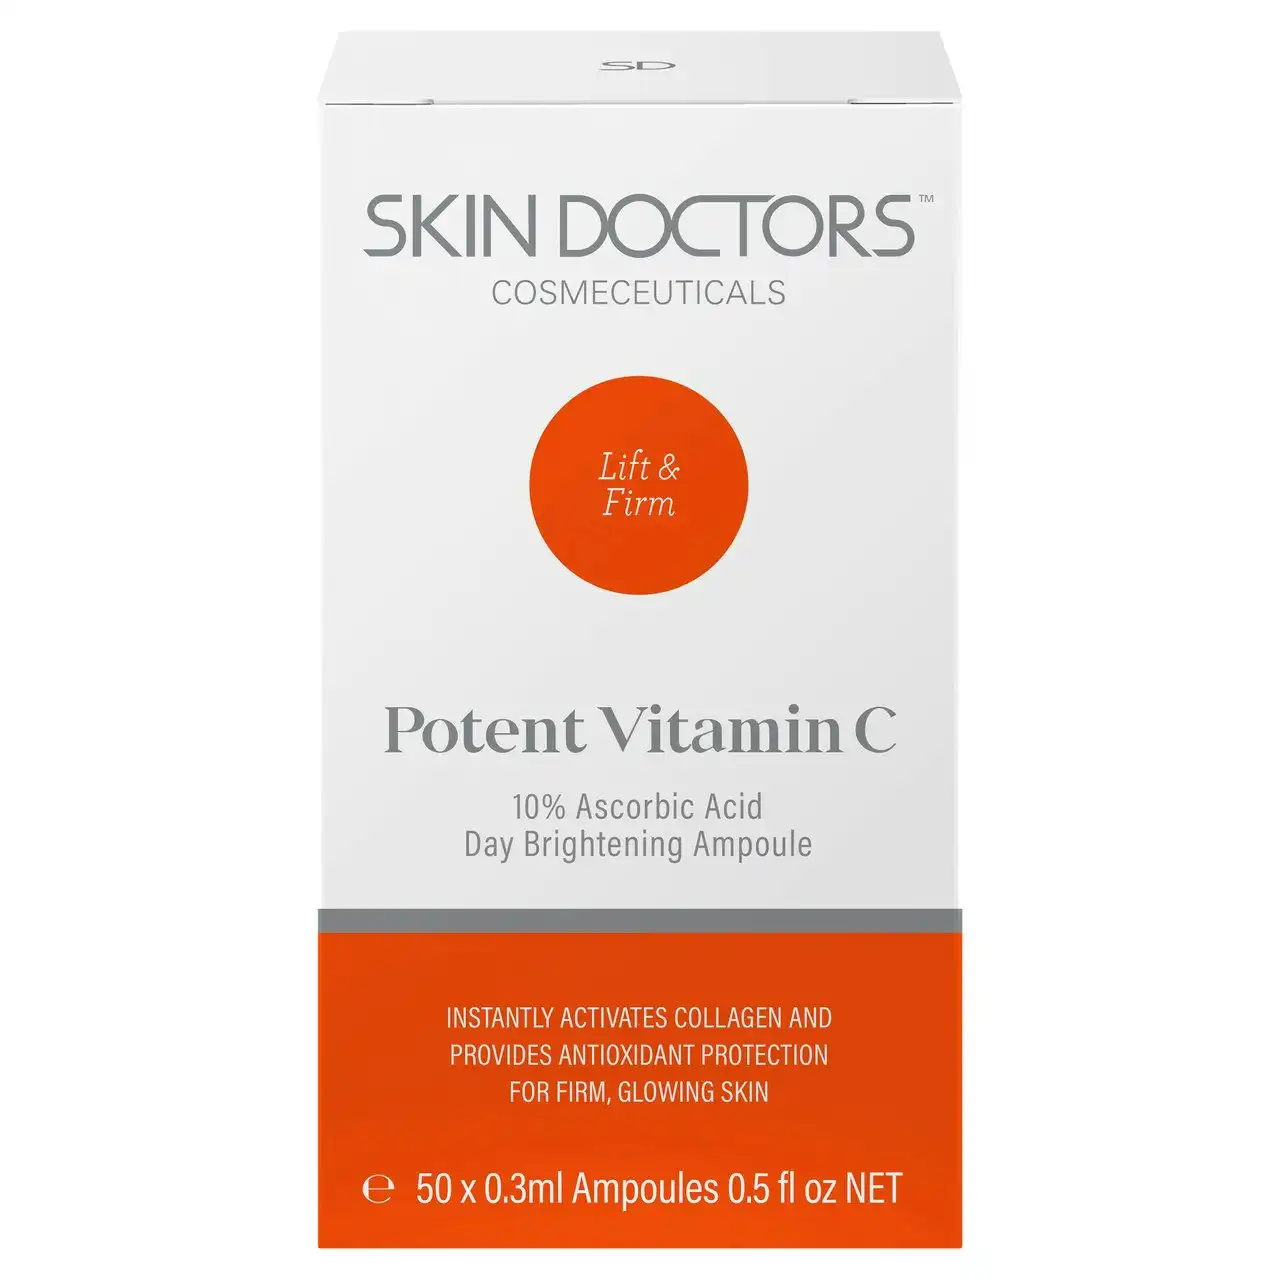 Skin Doctors Potent Vitamin C Ampoules 50 x 0.3ml